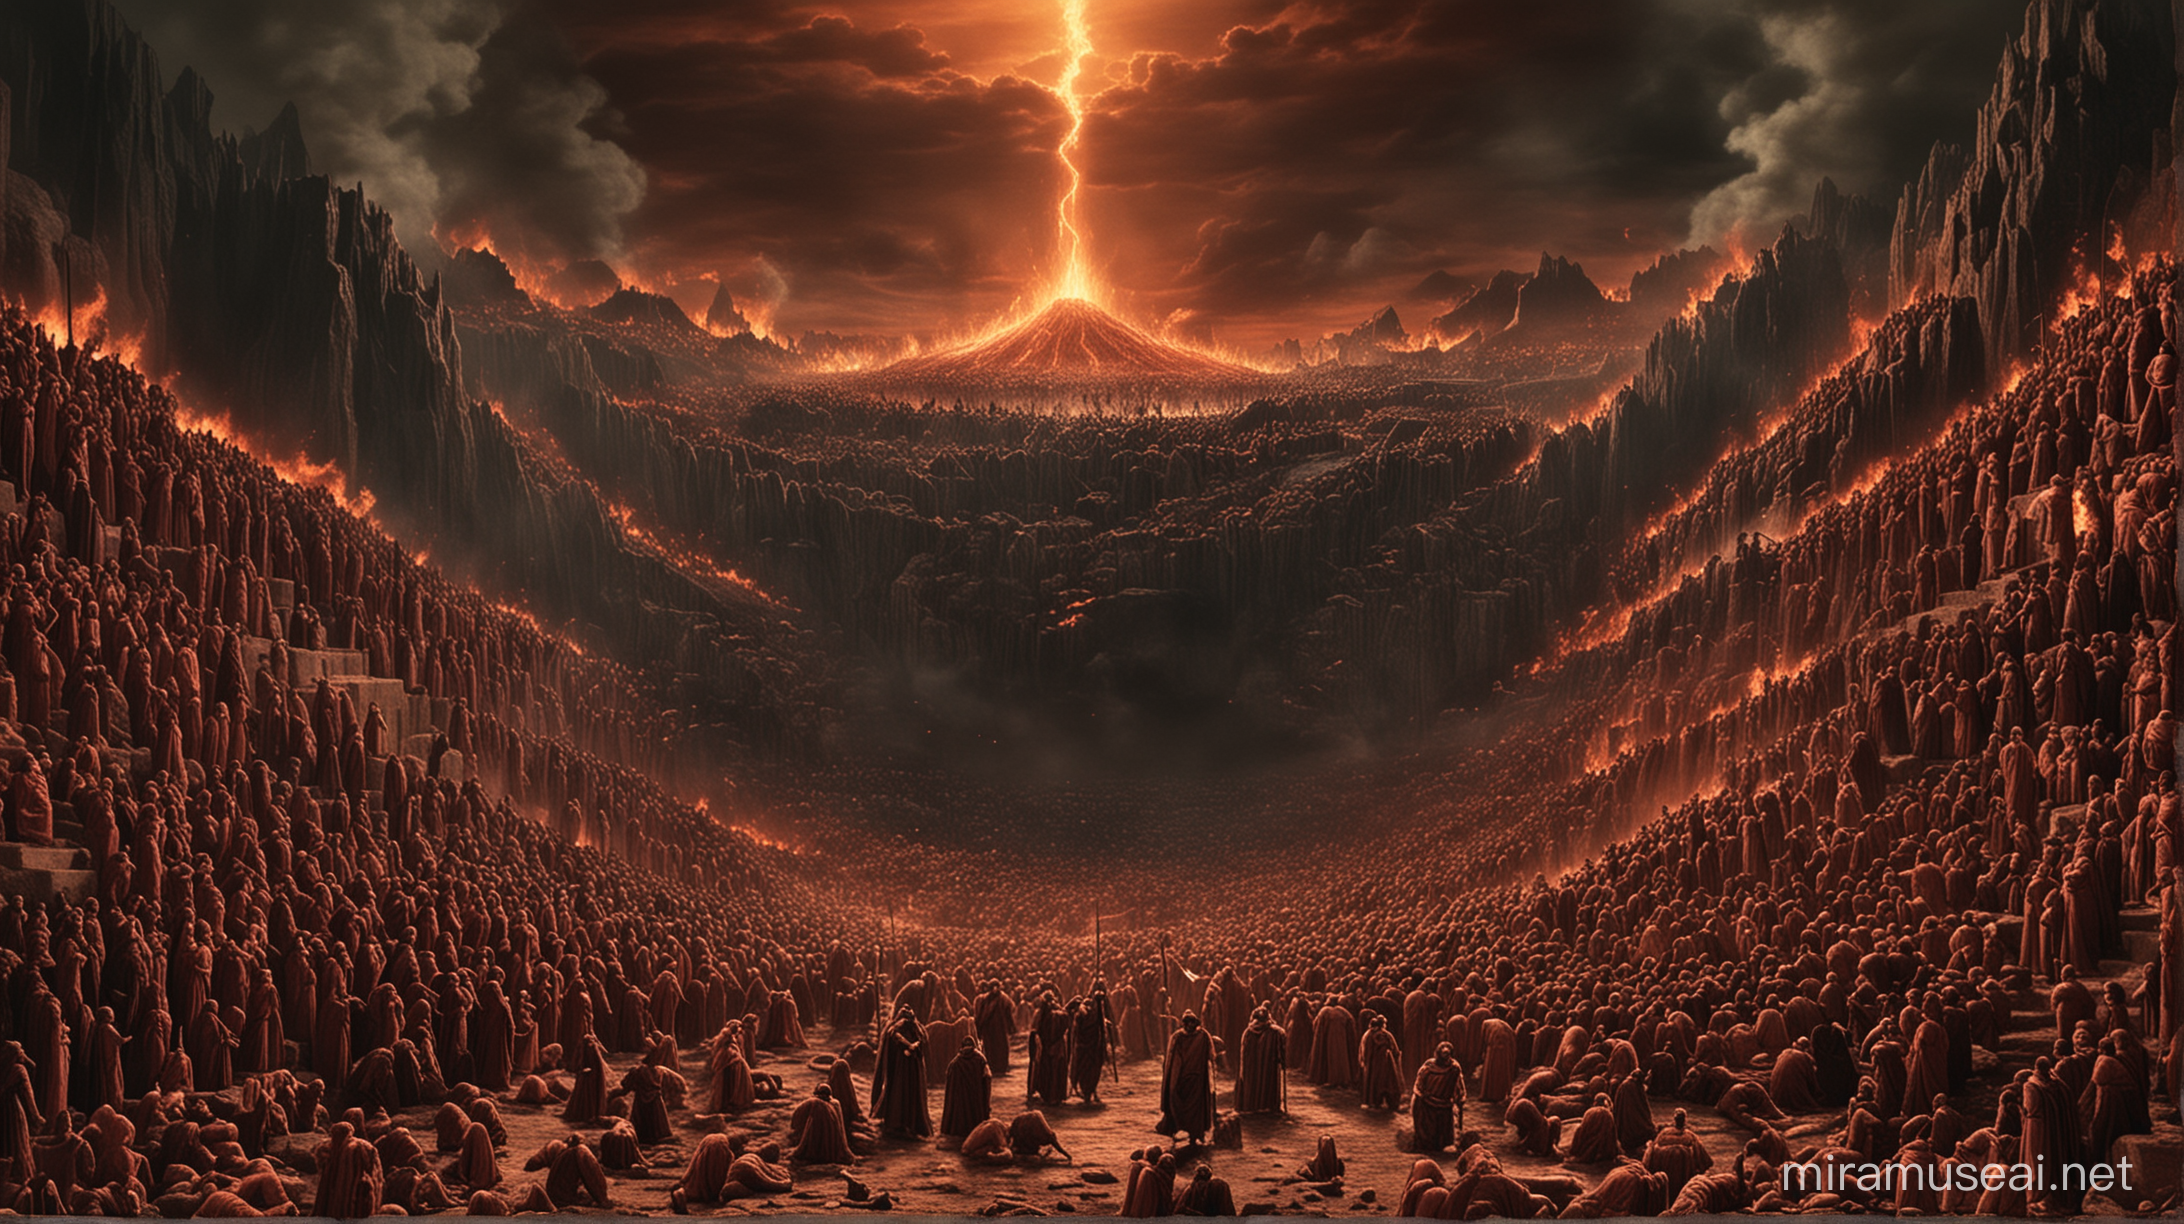 Dramatic Representation of Biblical Hell